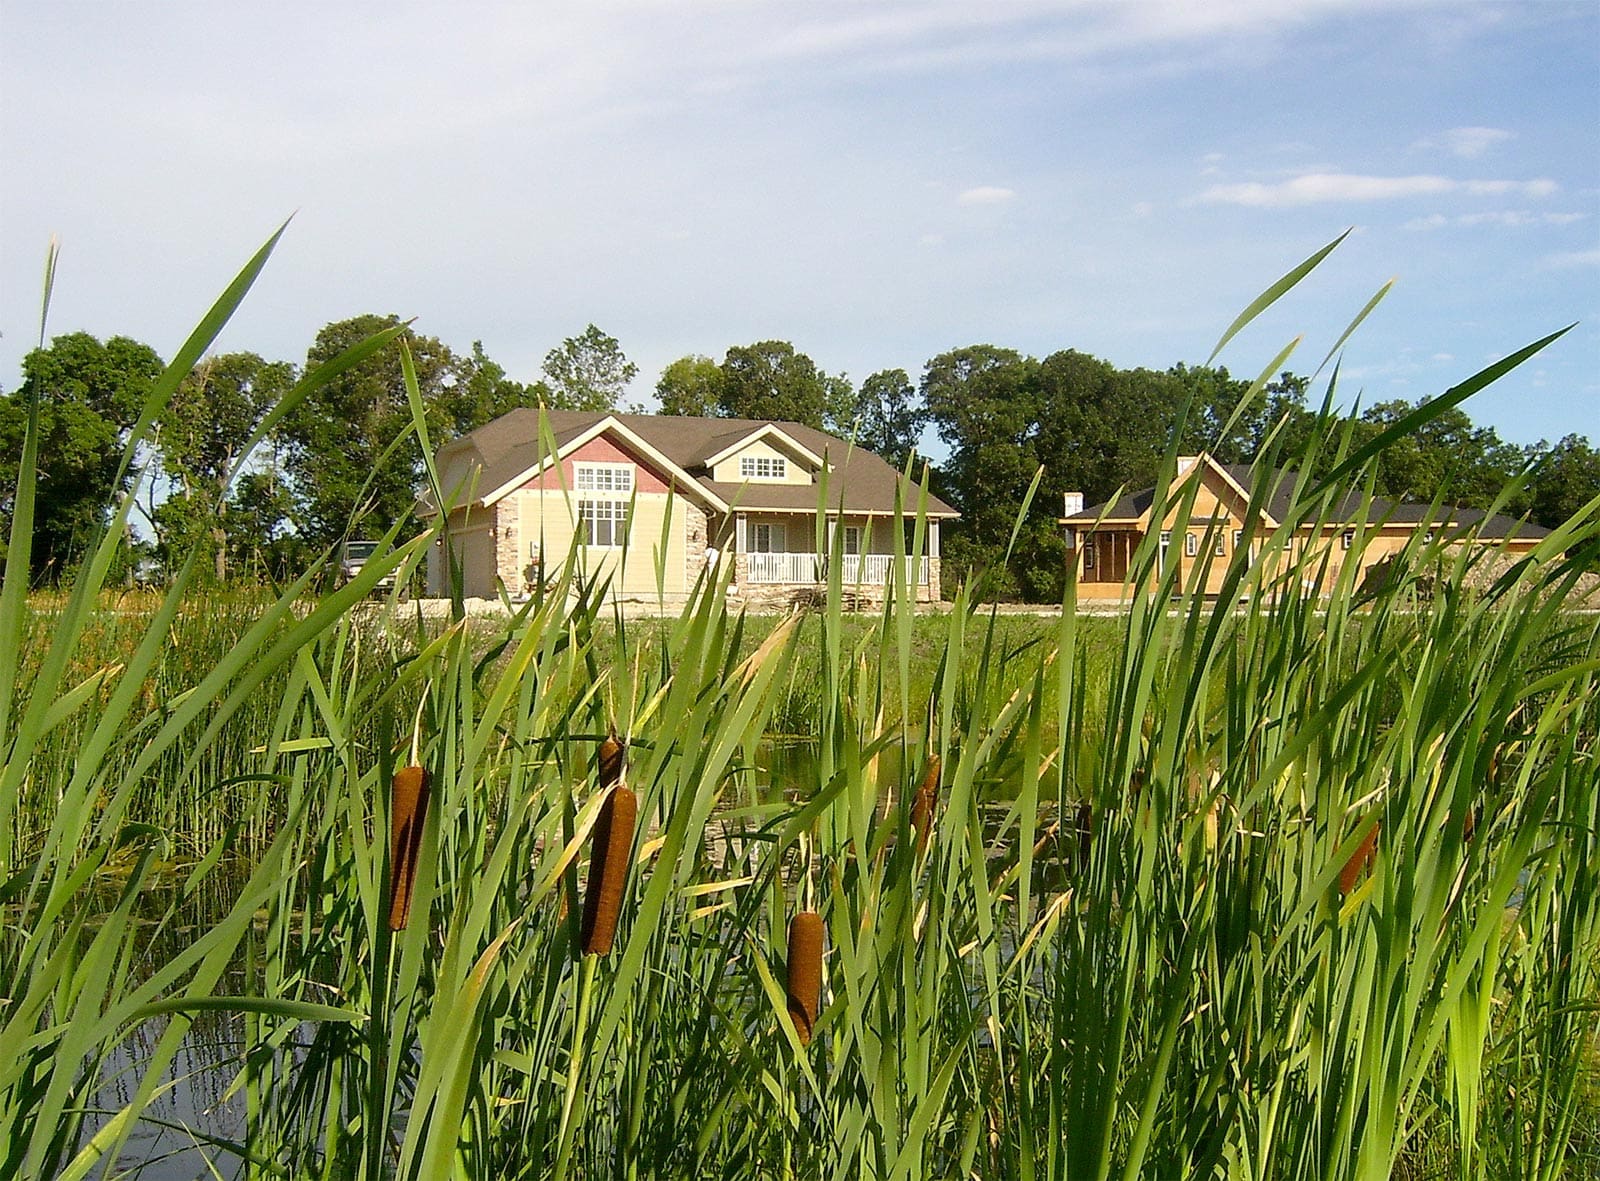 Houses and wetland